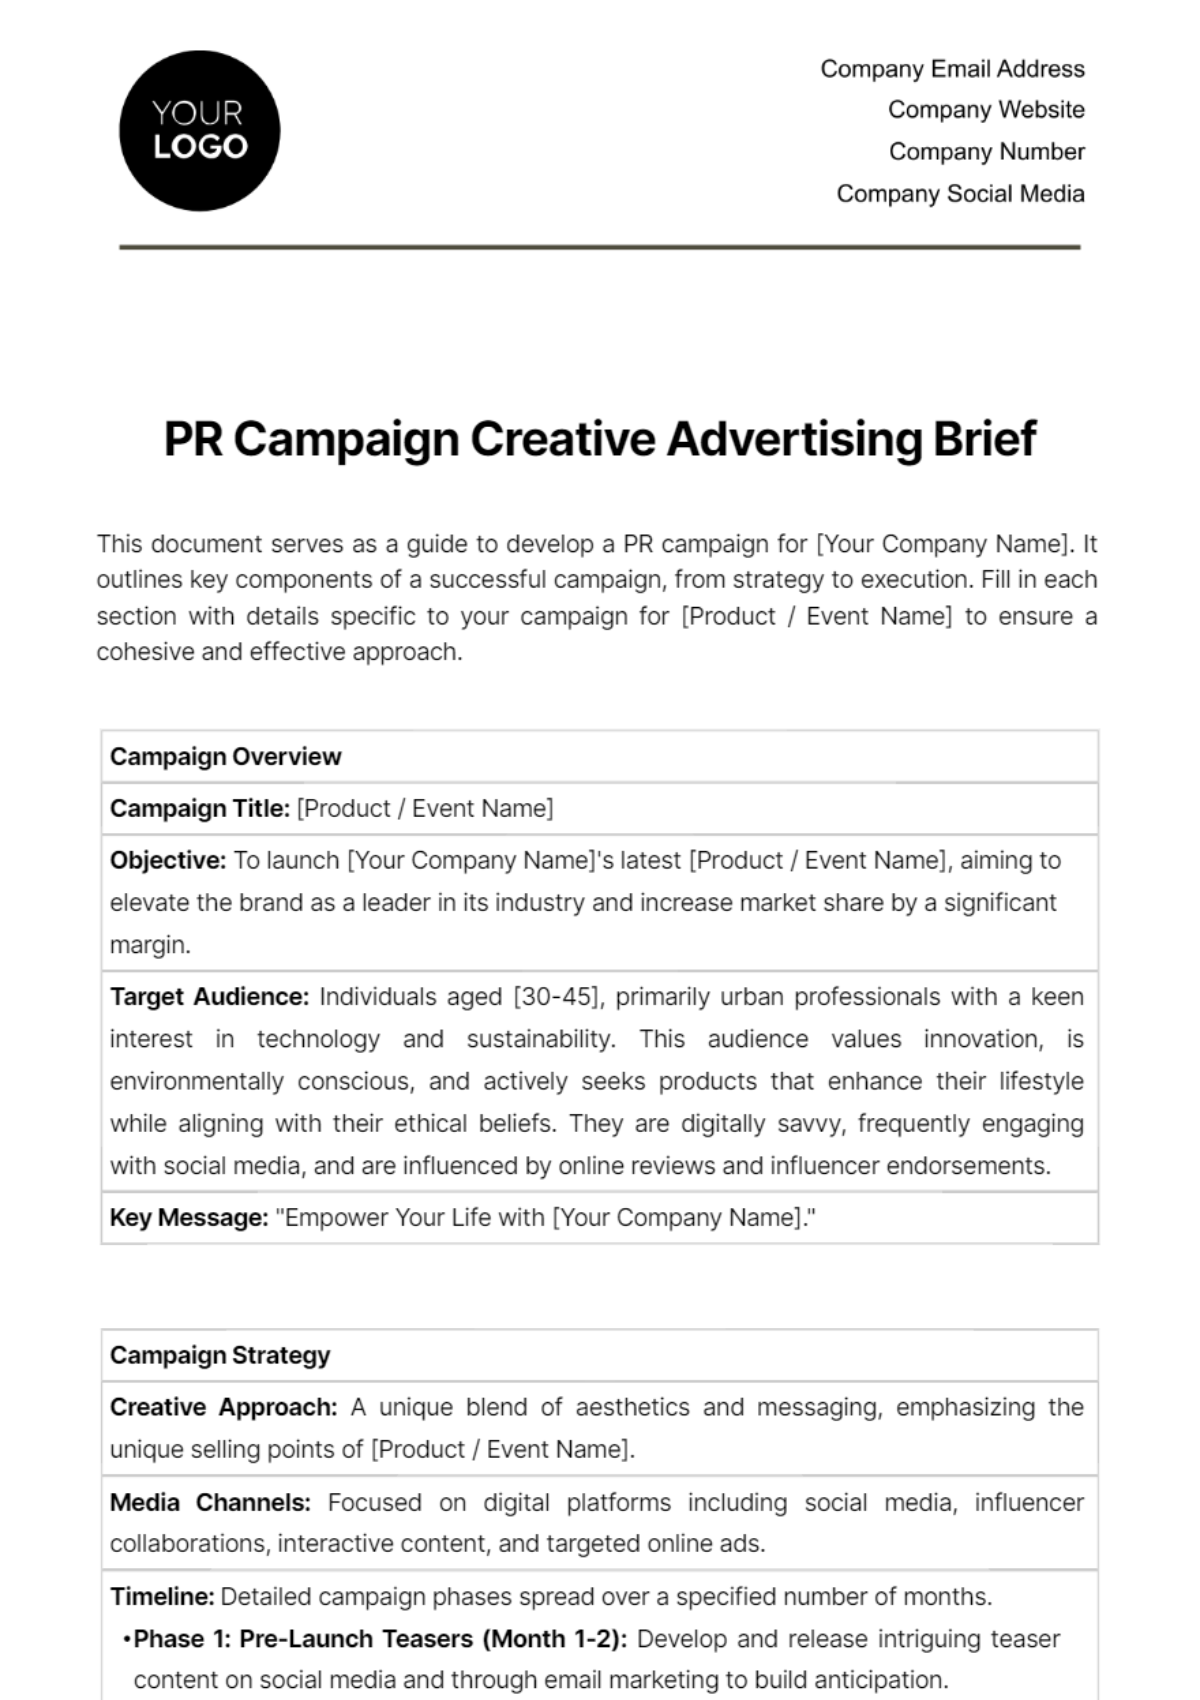 PR Campaign Creative Advertising Brief Template